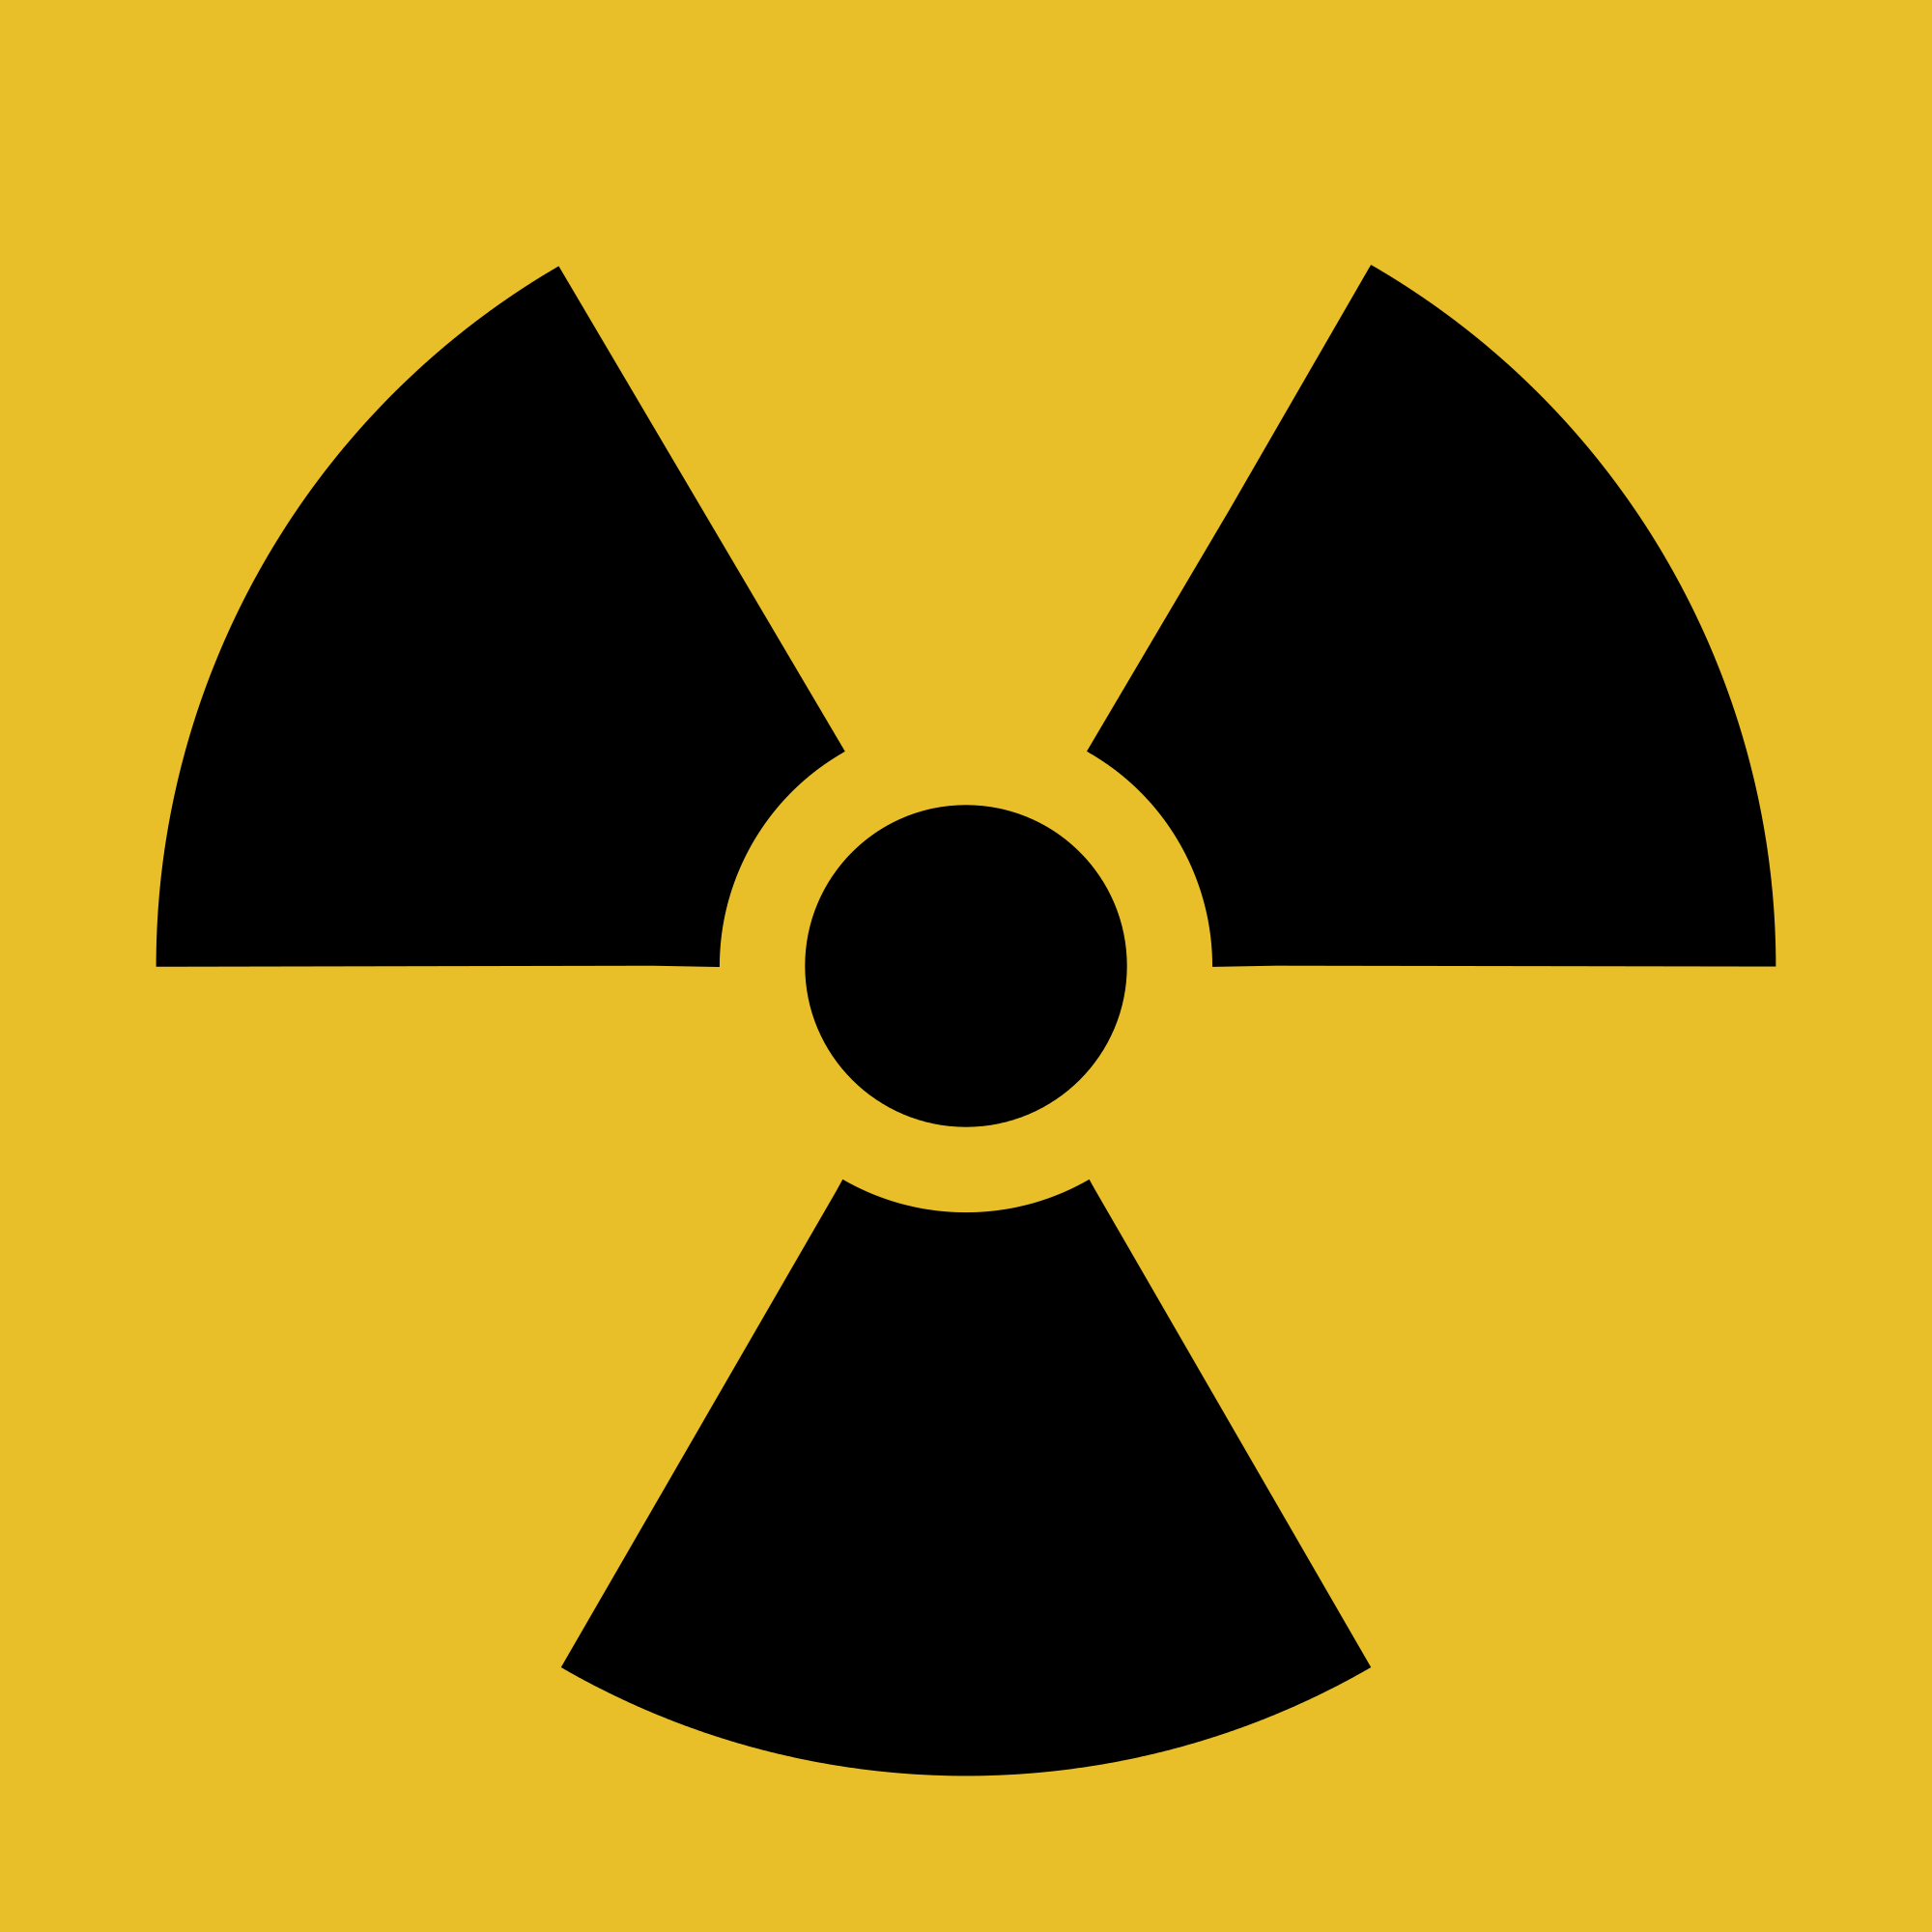 Radiation warning symbol. Uranium is radioactive.